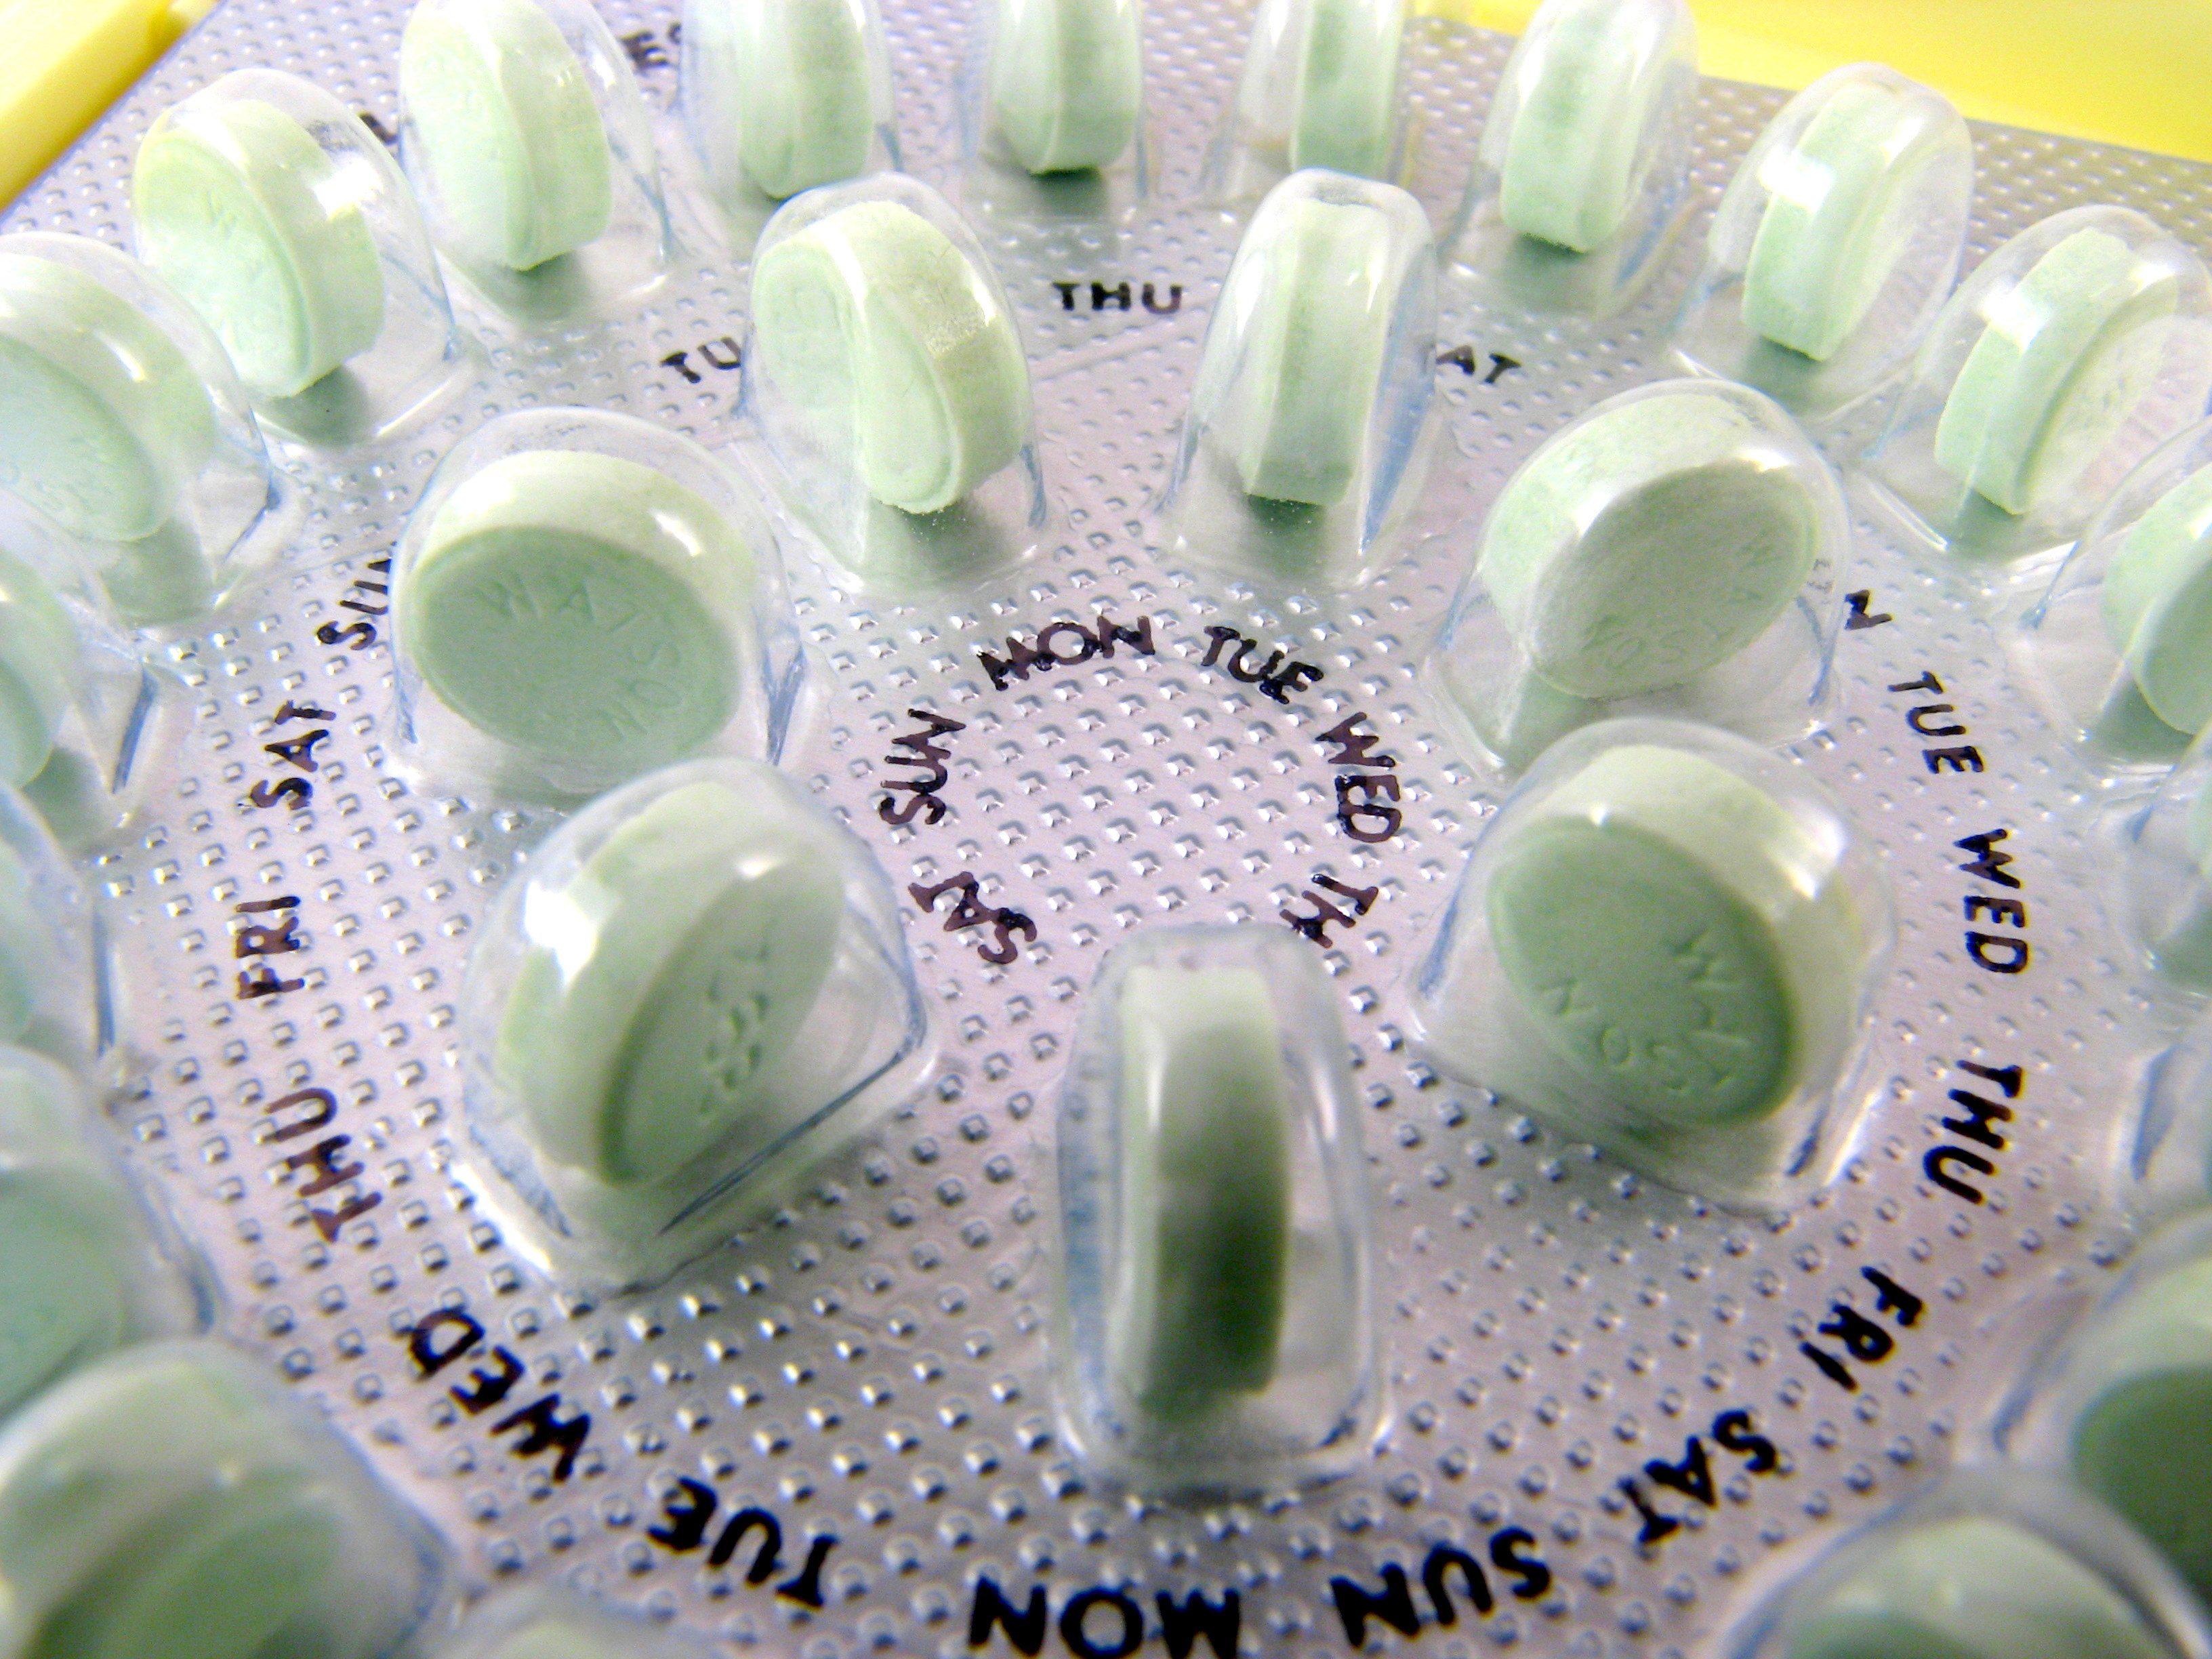 Birth control pills sit in packaging. Shutterstock image via Barbara J. Johnson